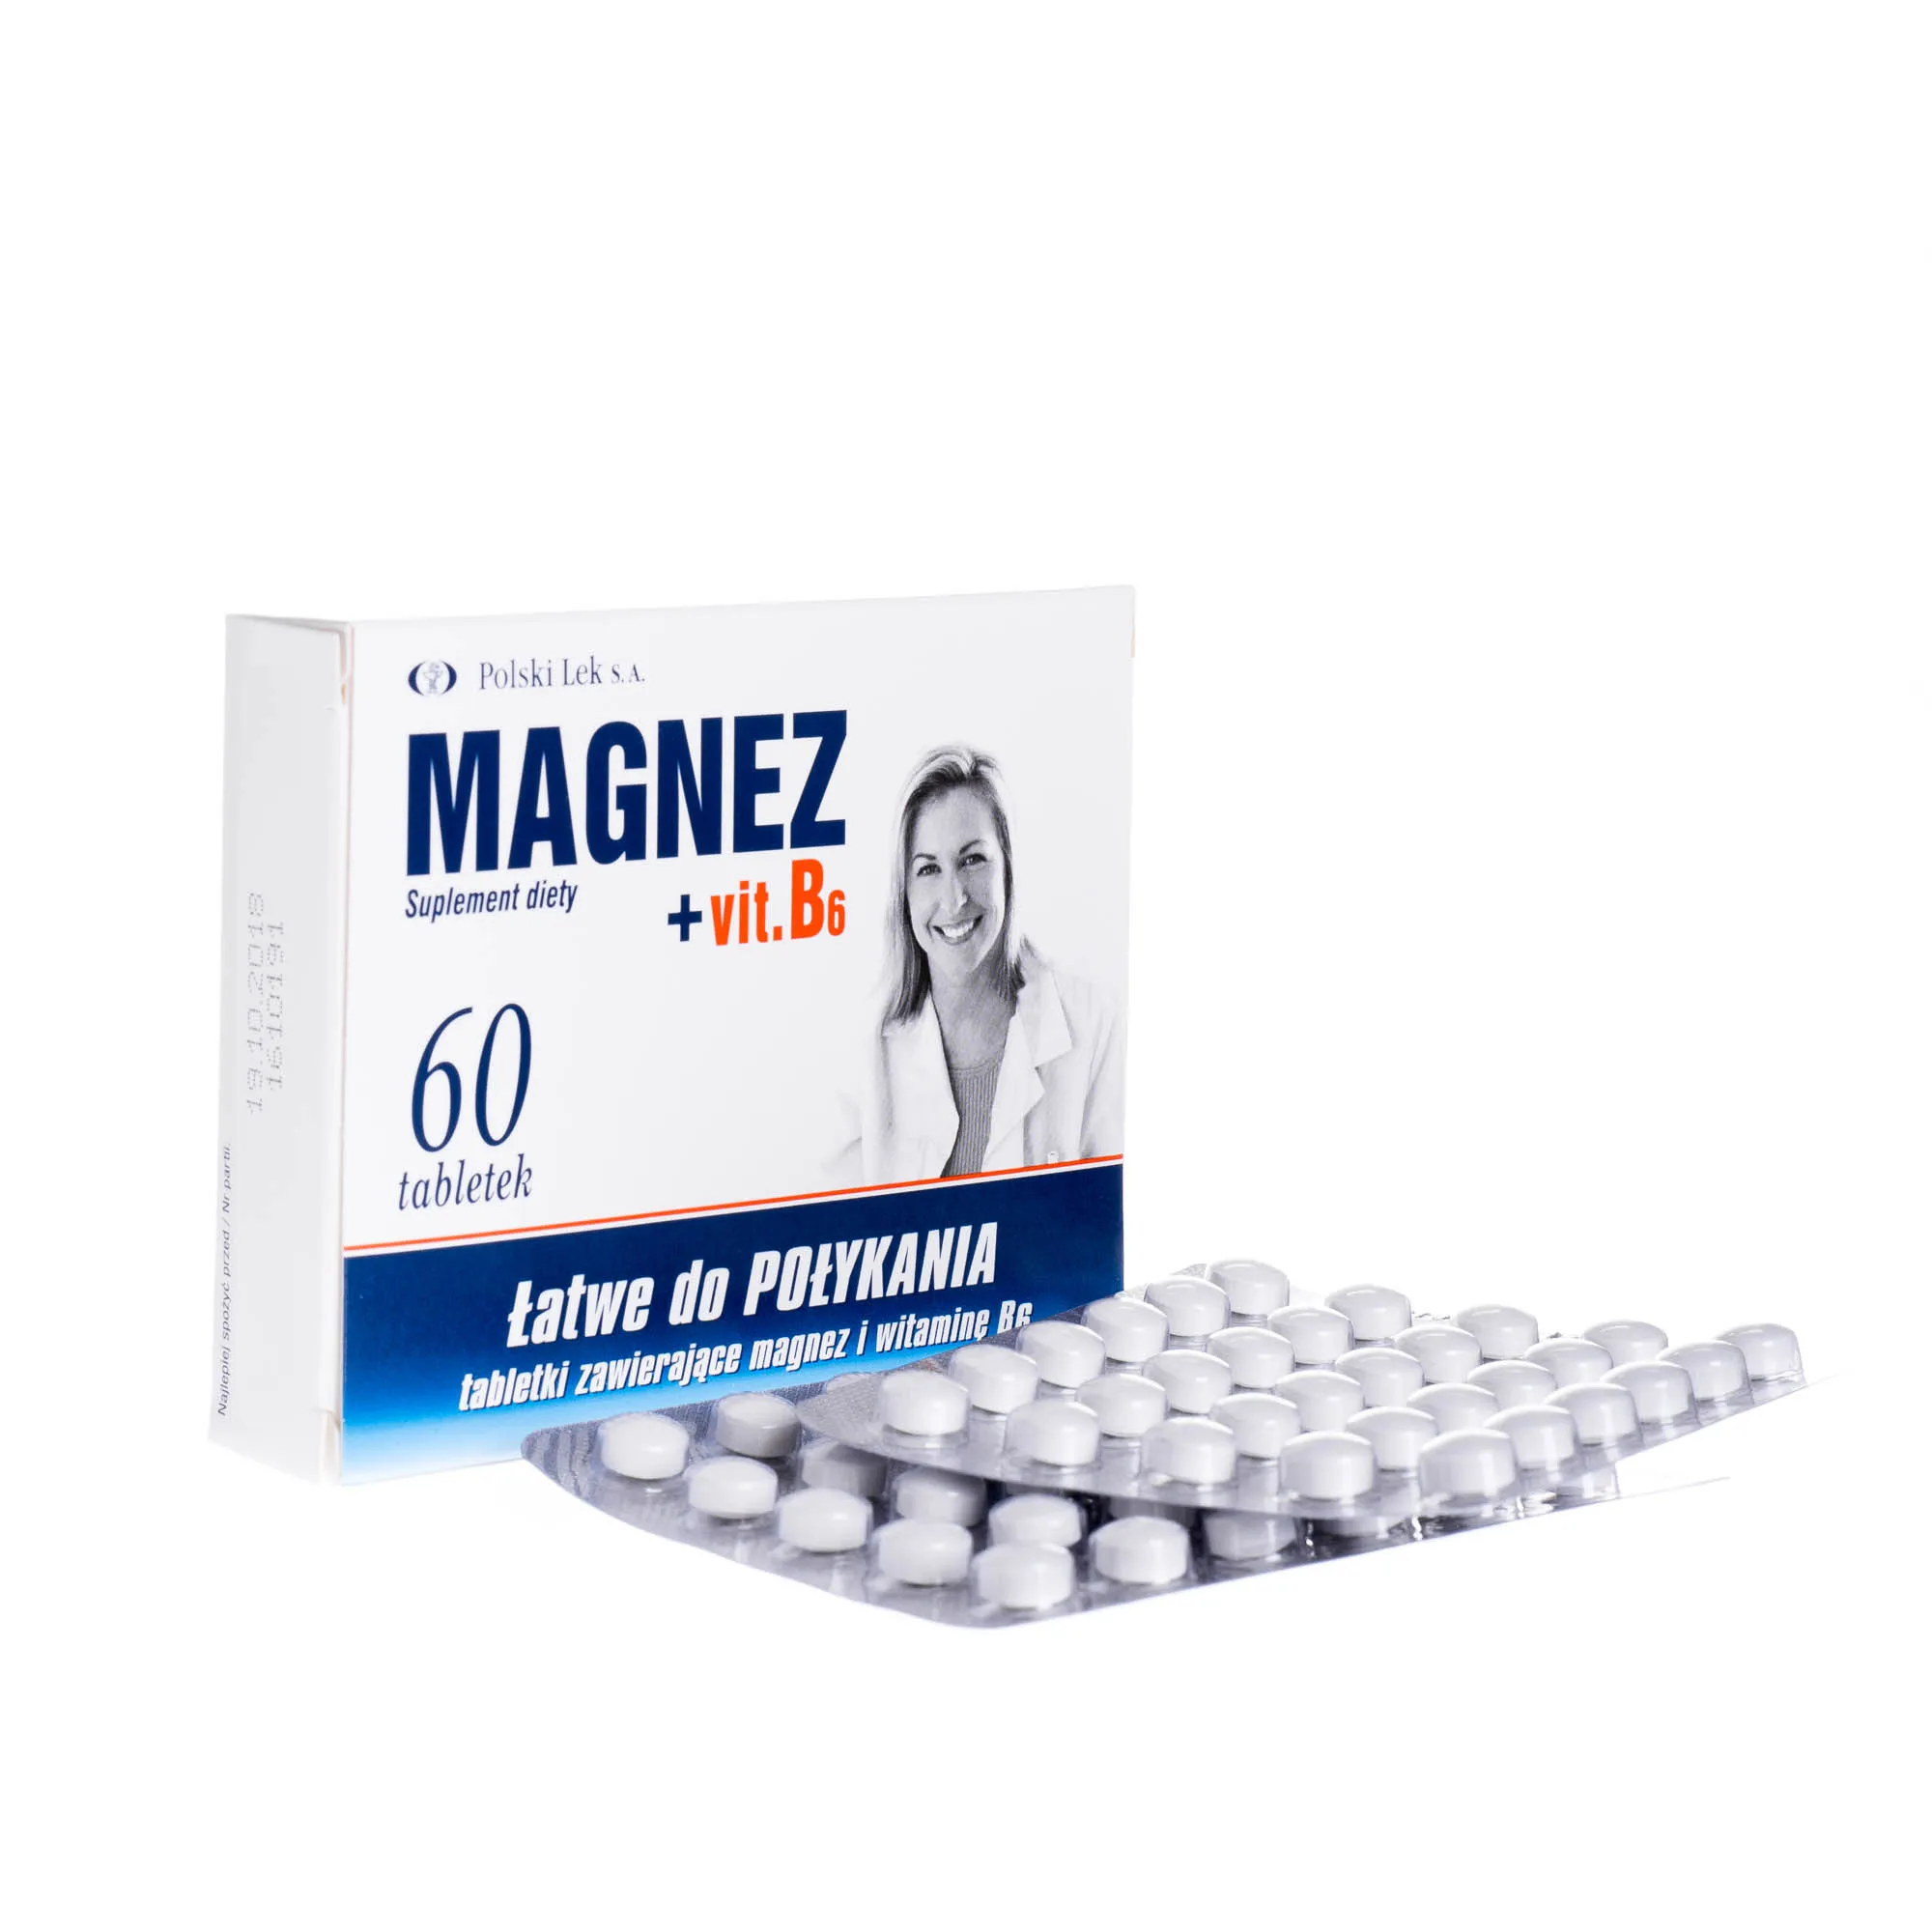 Magnez + vit. B6 suplement diety 60 tabletek 